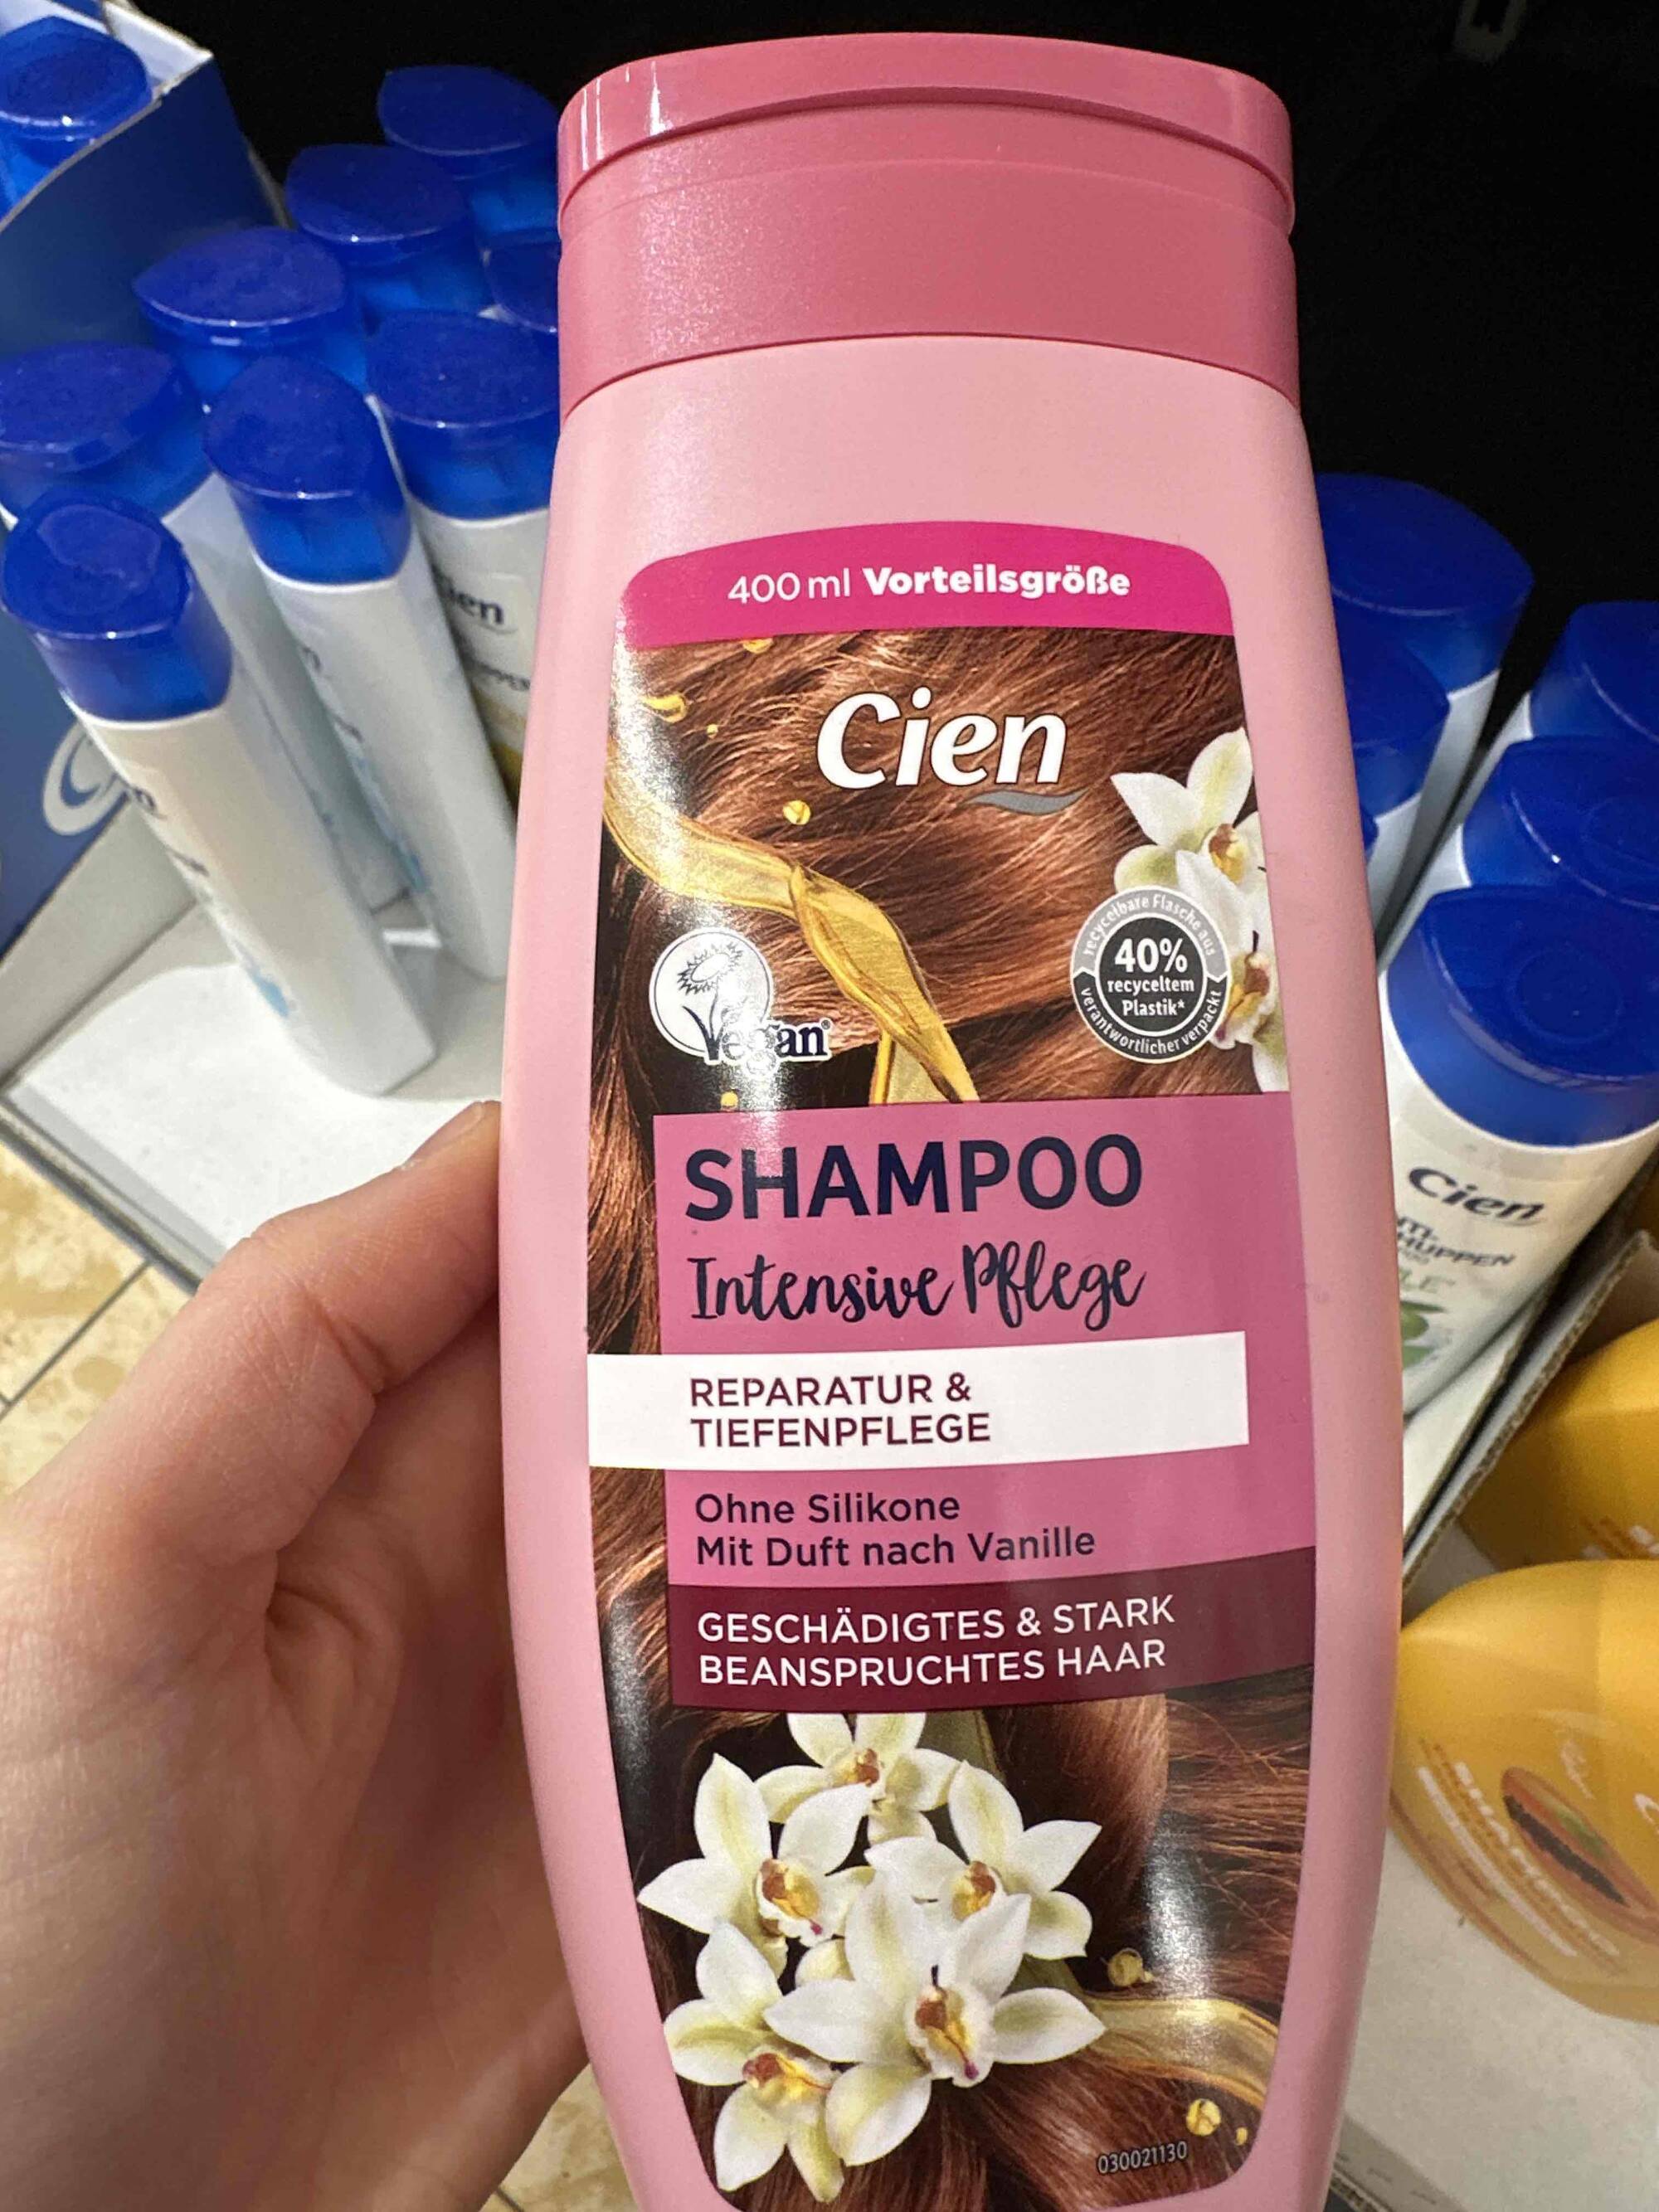 CIEN - Shampoo intensive pflege reparatur & tiefenpflege